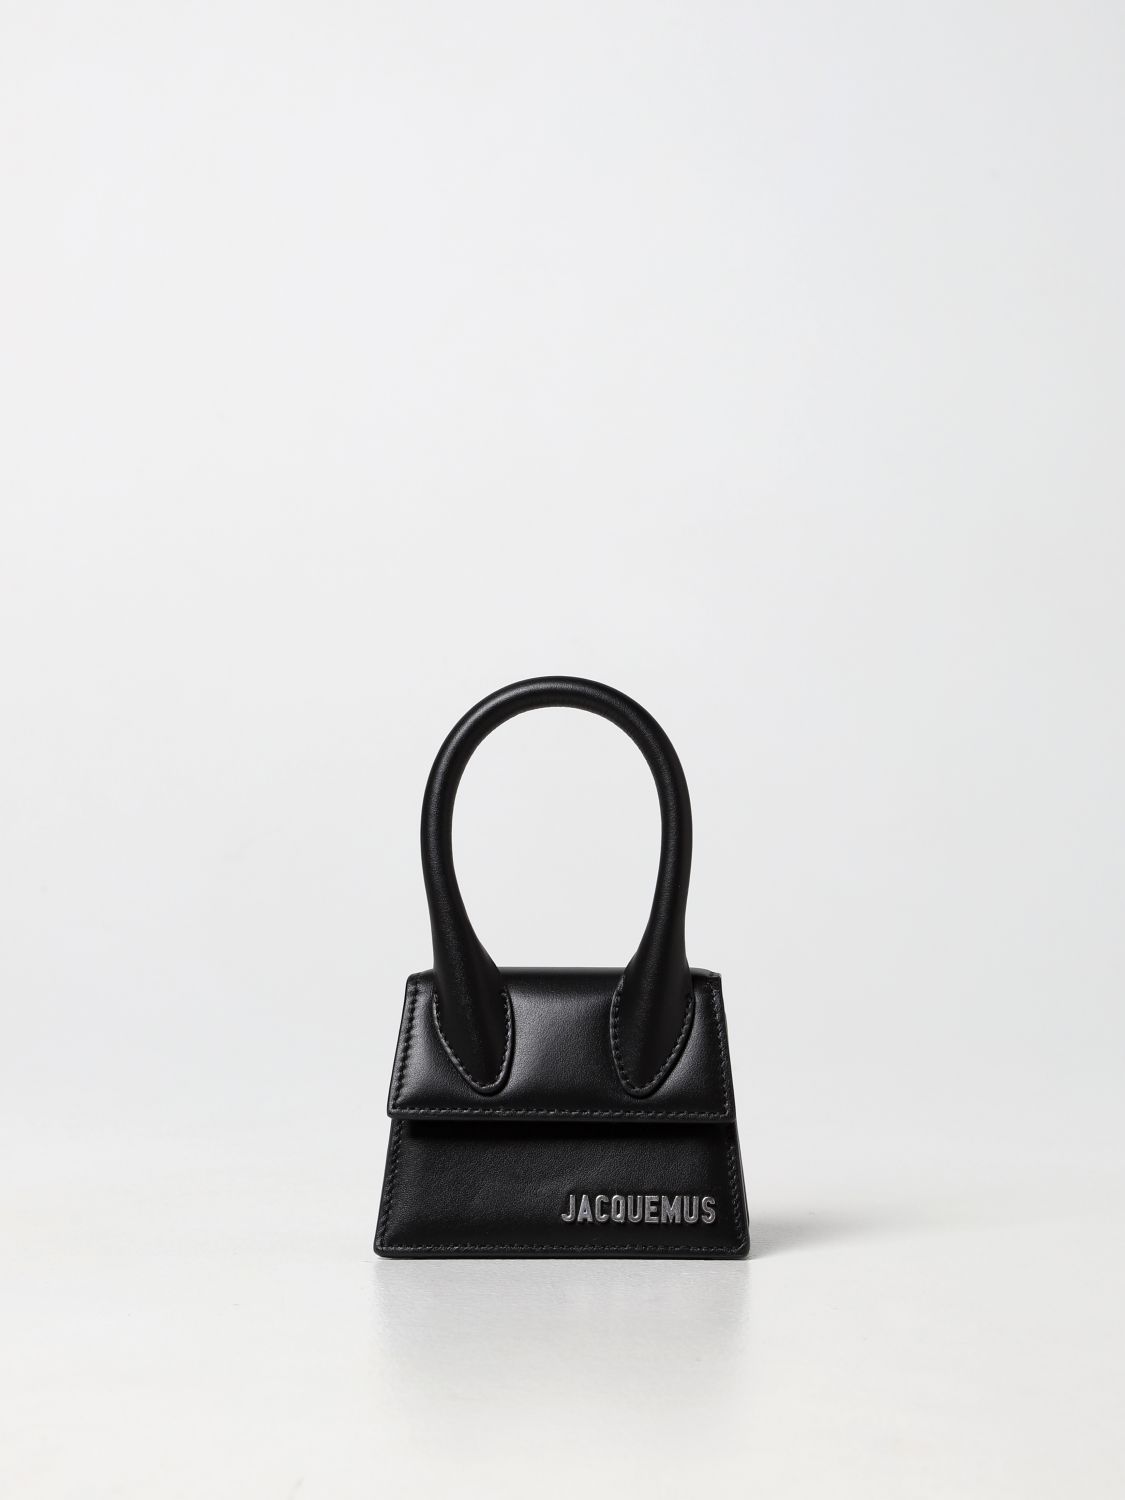 Jacquemus Le Chiquito  Leather Bag In Black